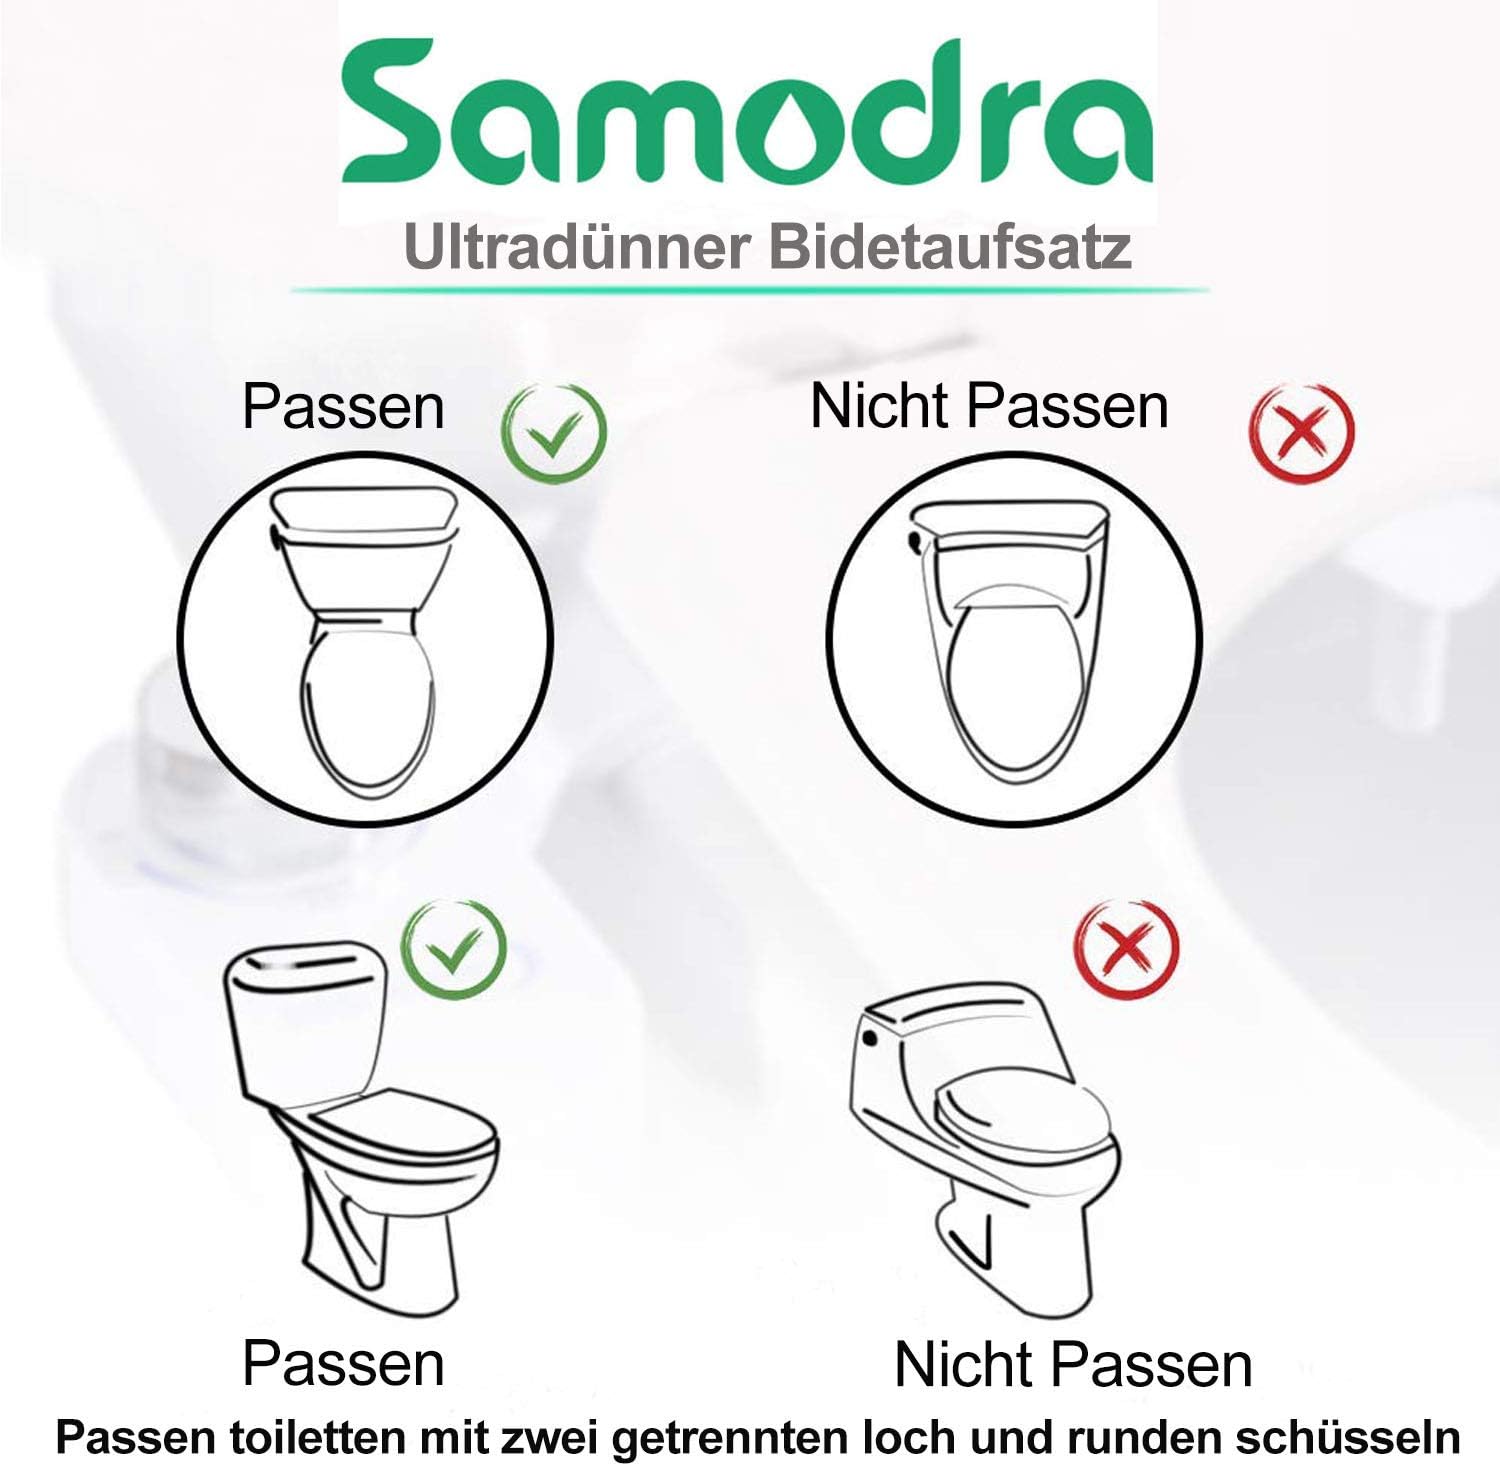 SAMODRA Bidet para wc Bidet 7.0 Inodoro Inteligente No Eléctrico